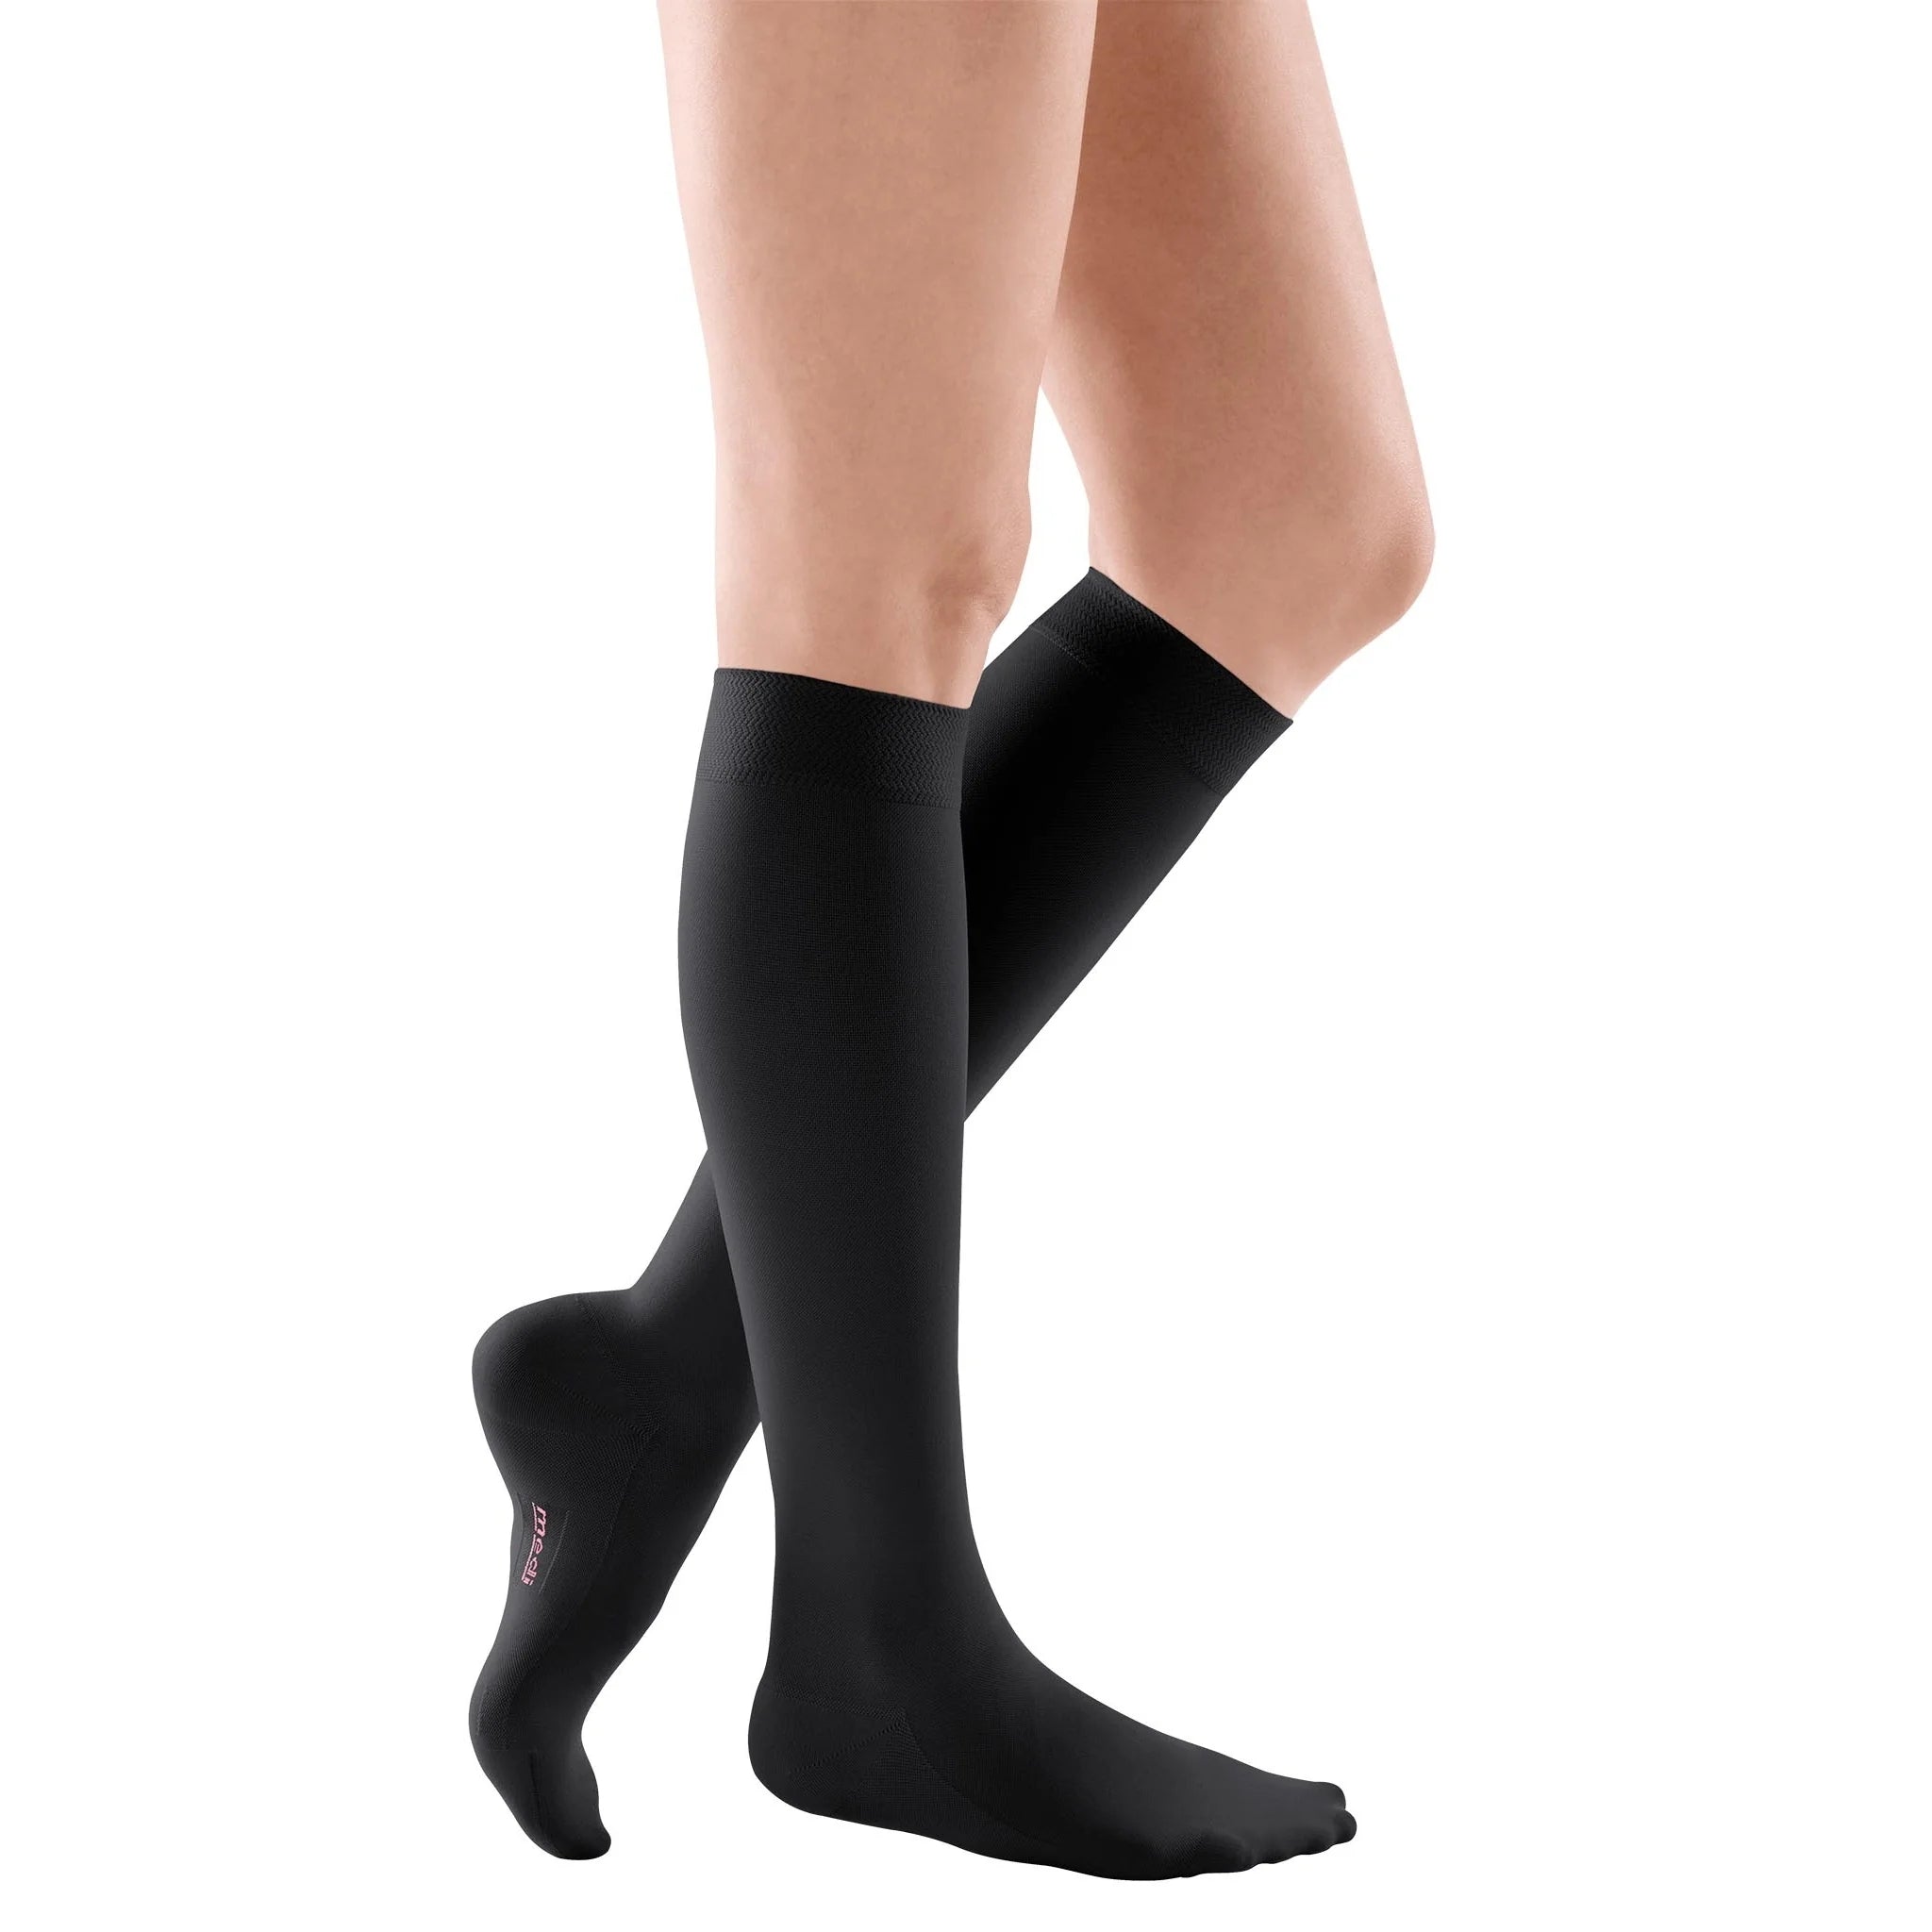 mediven comfort Below Knee Compression Stockings Black